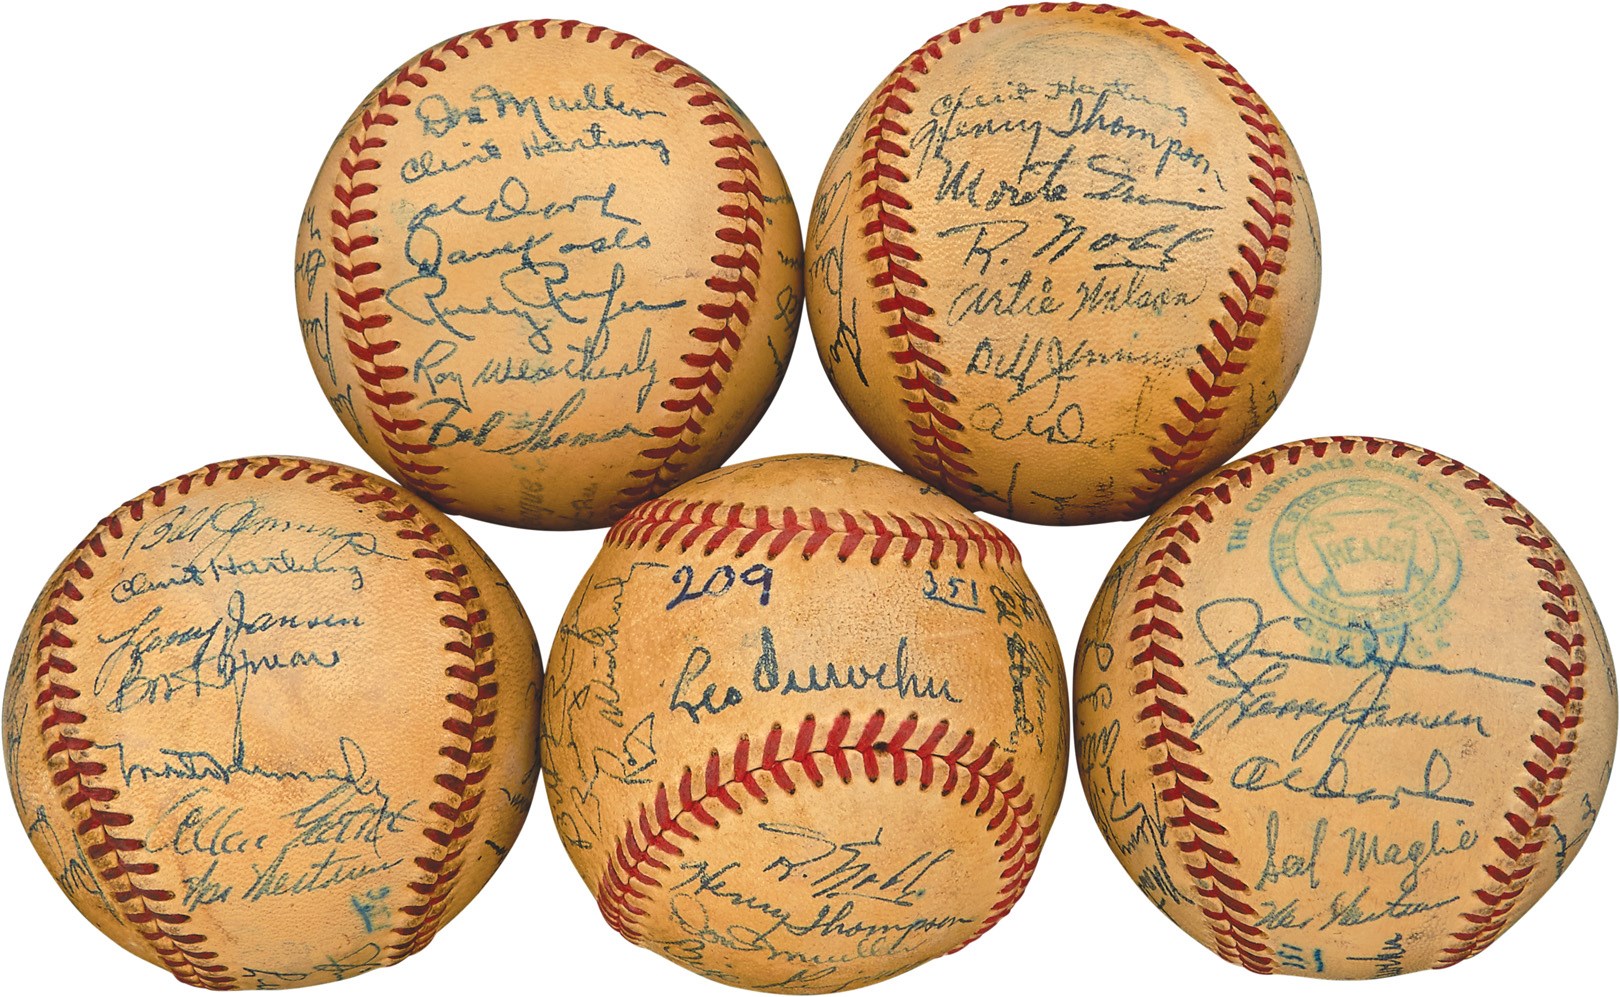 1951 National League Champion NY Giants Team-Signed Baseballs (5)